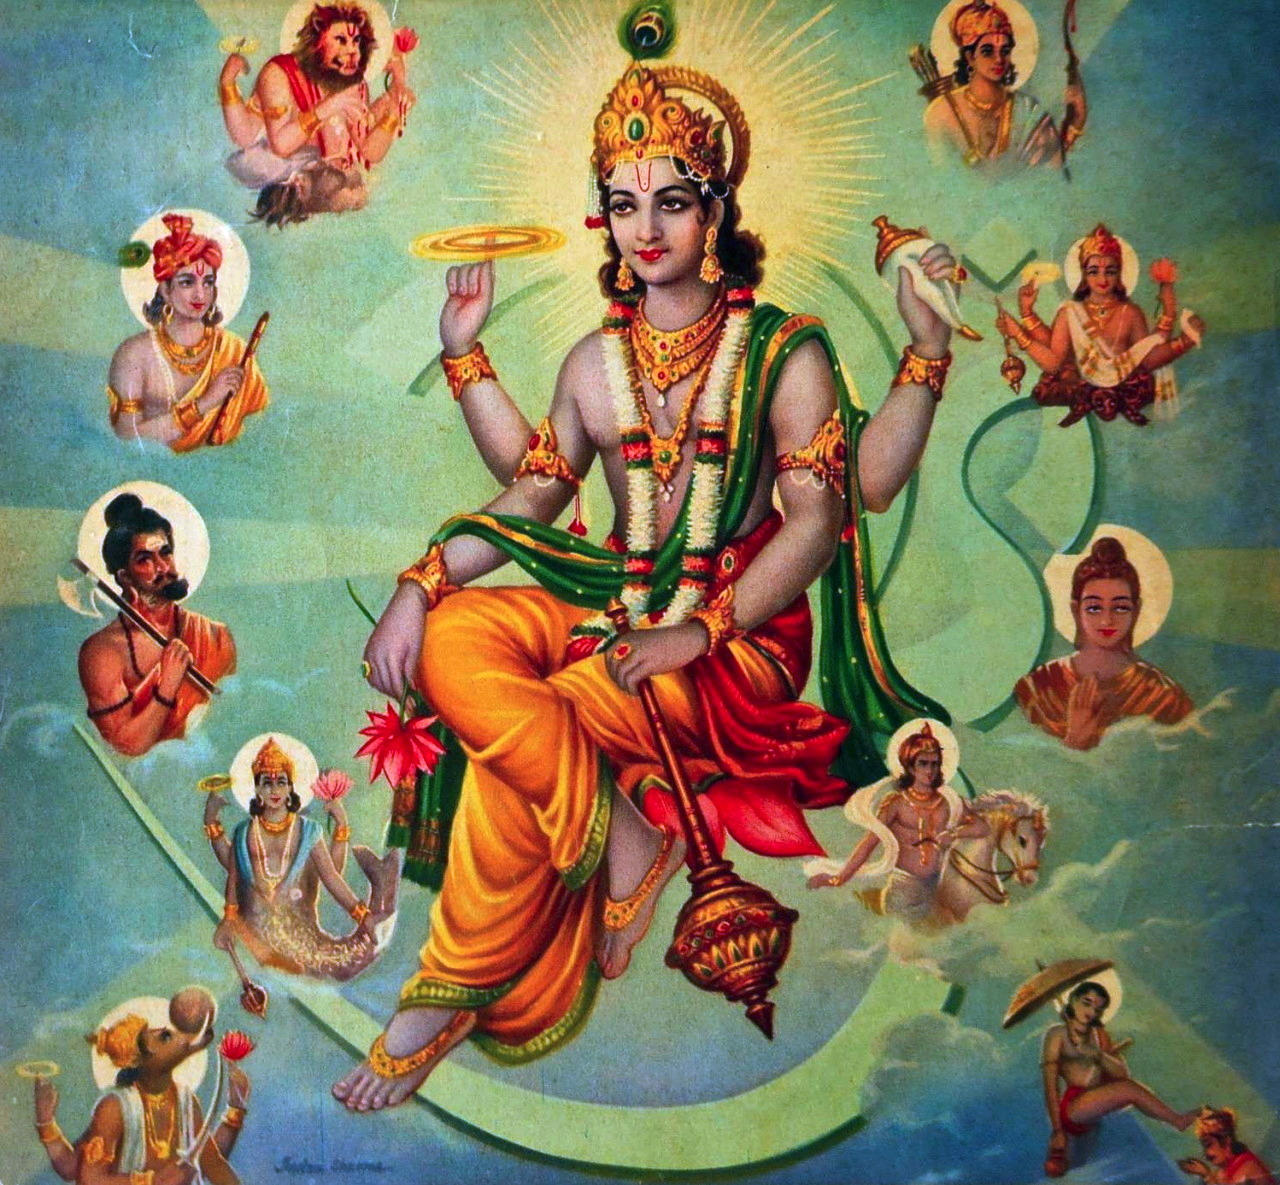 Astonishing Compilation of Over 999 Lord Vishnu Images in Full 4K Resolution